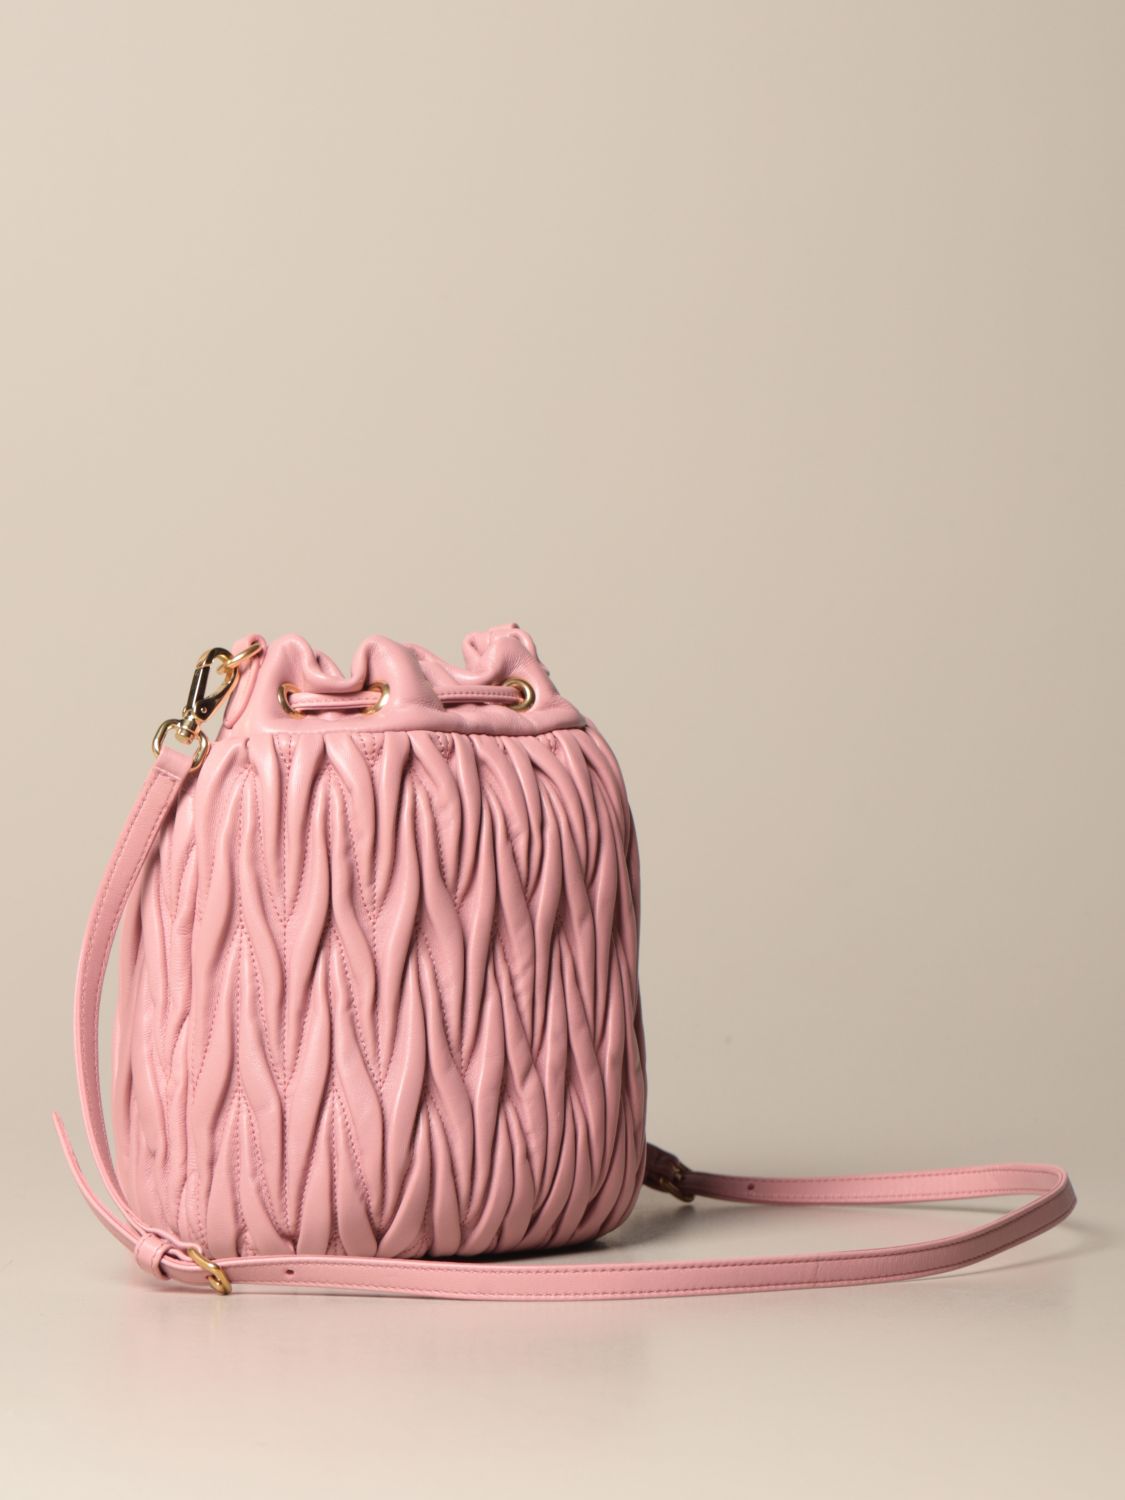 MIU MIU: Miu Délice bag in matelassé leather - Pink  Miu Miu crossbody bags  5BP001 N88 online at